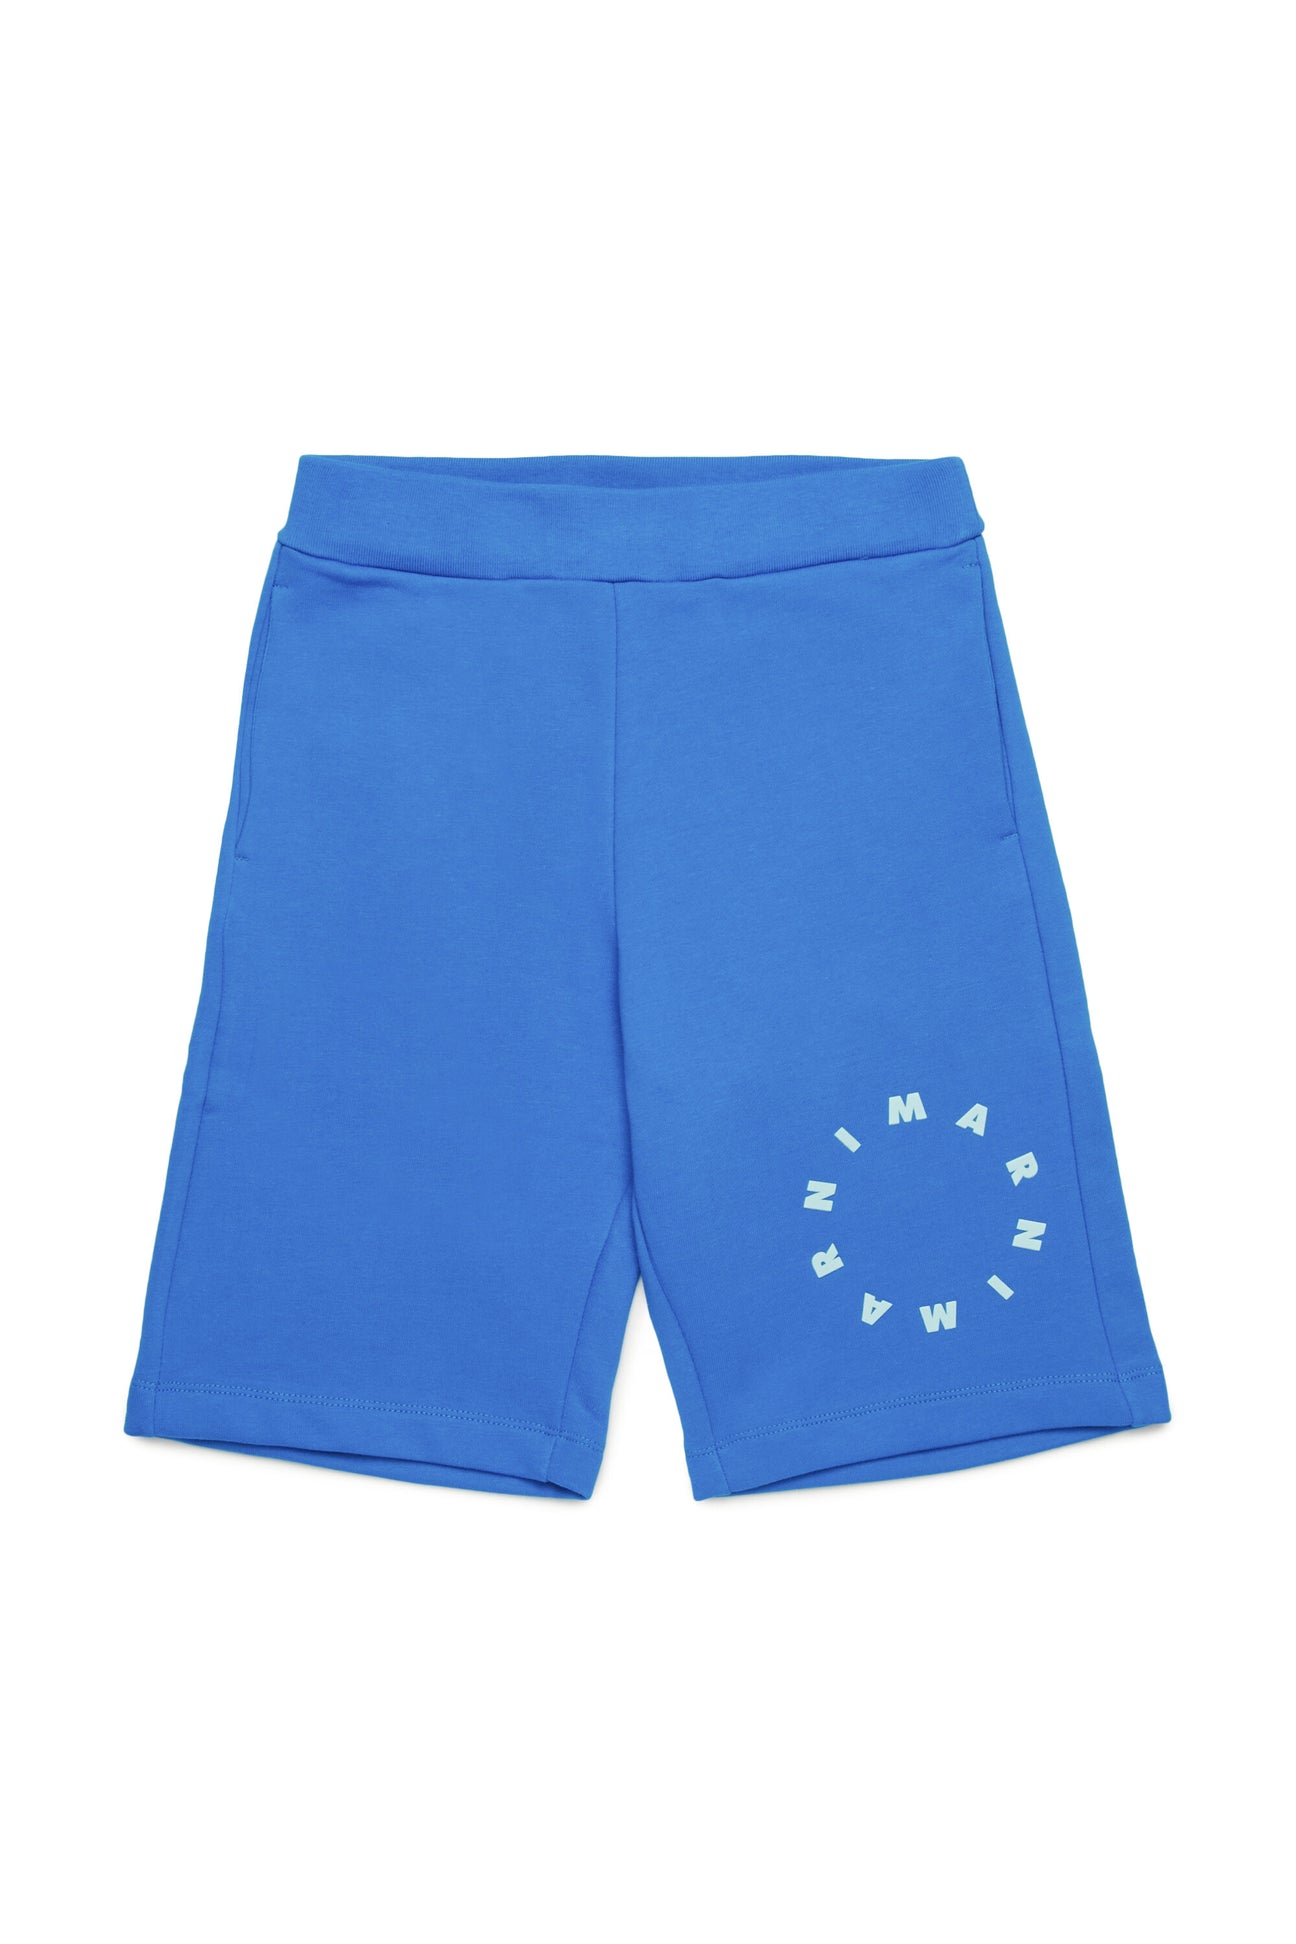 Pantalones cortos en chándal con logotipo redondo 